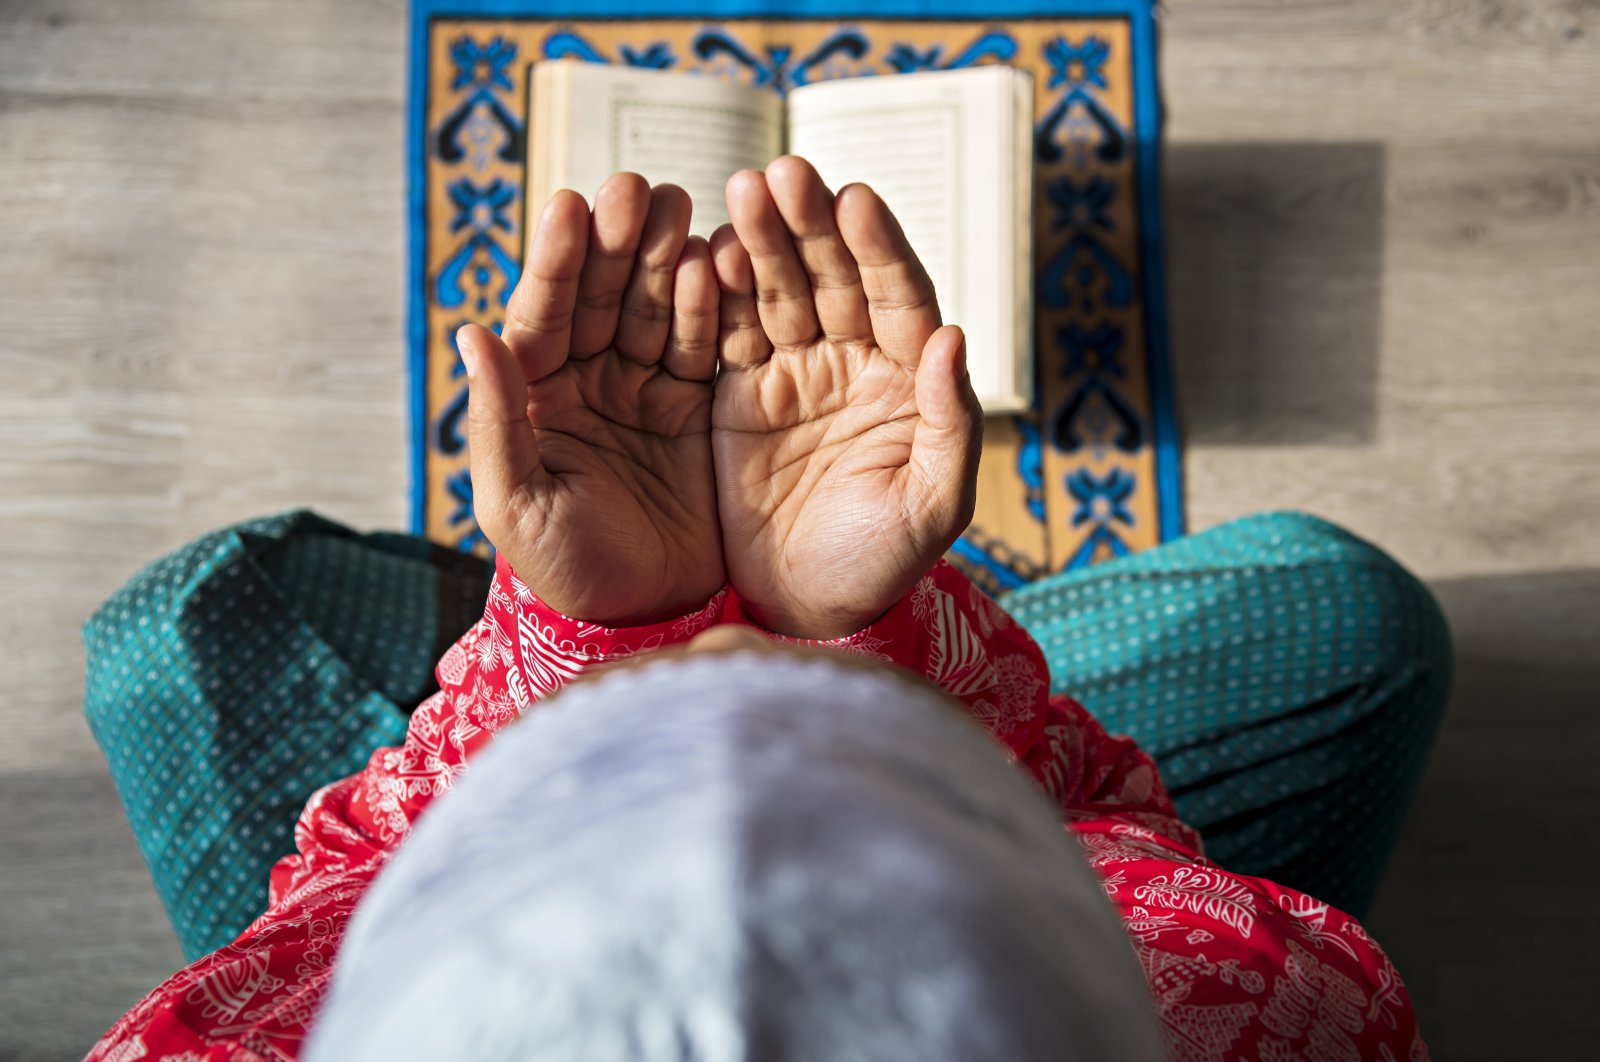 Apa yang dijanjikan Islam kepada orang yang tidak beriman?